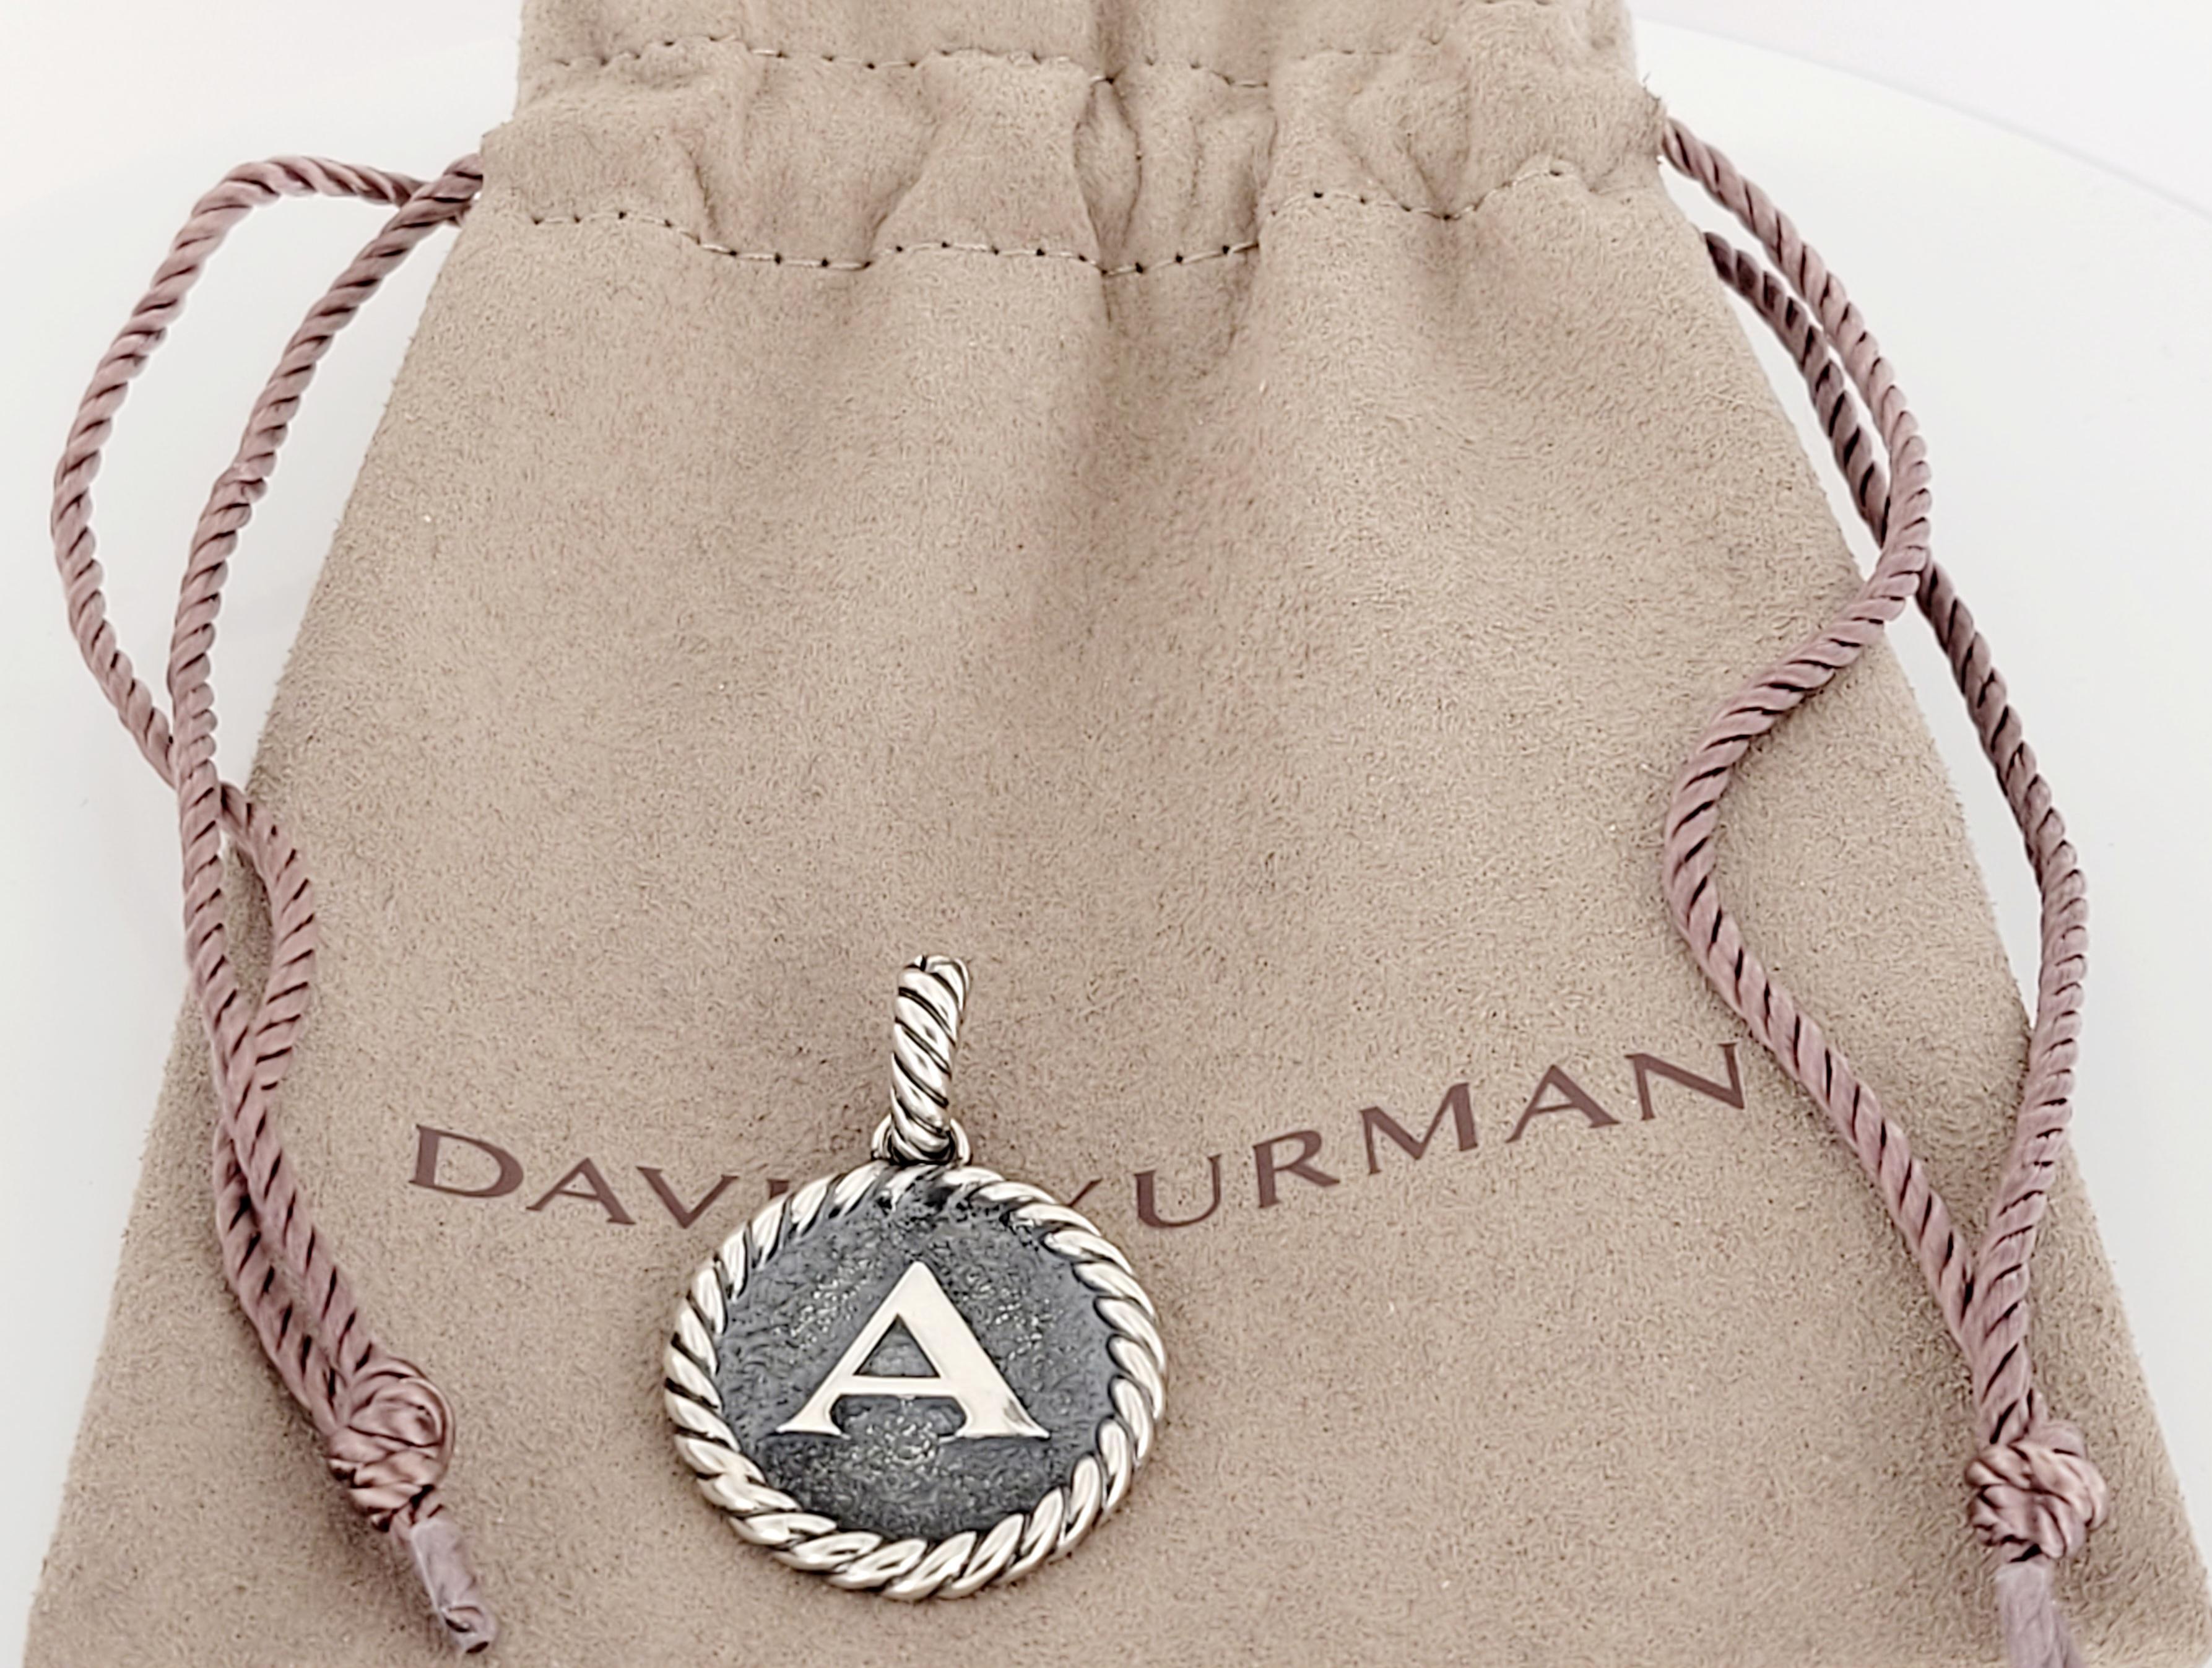 david yurman initial necklace